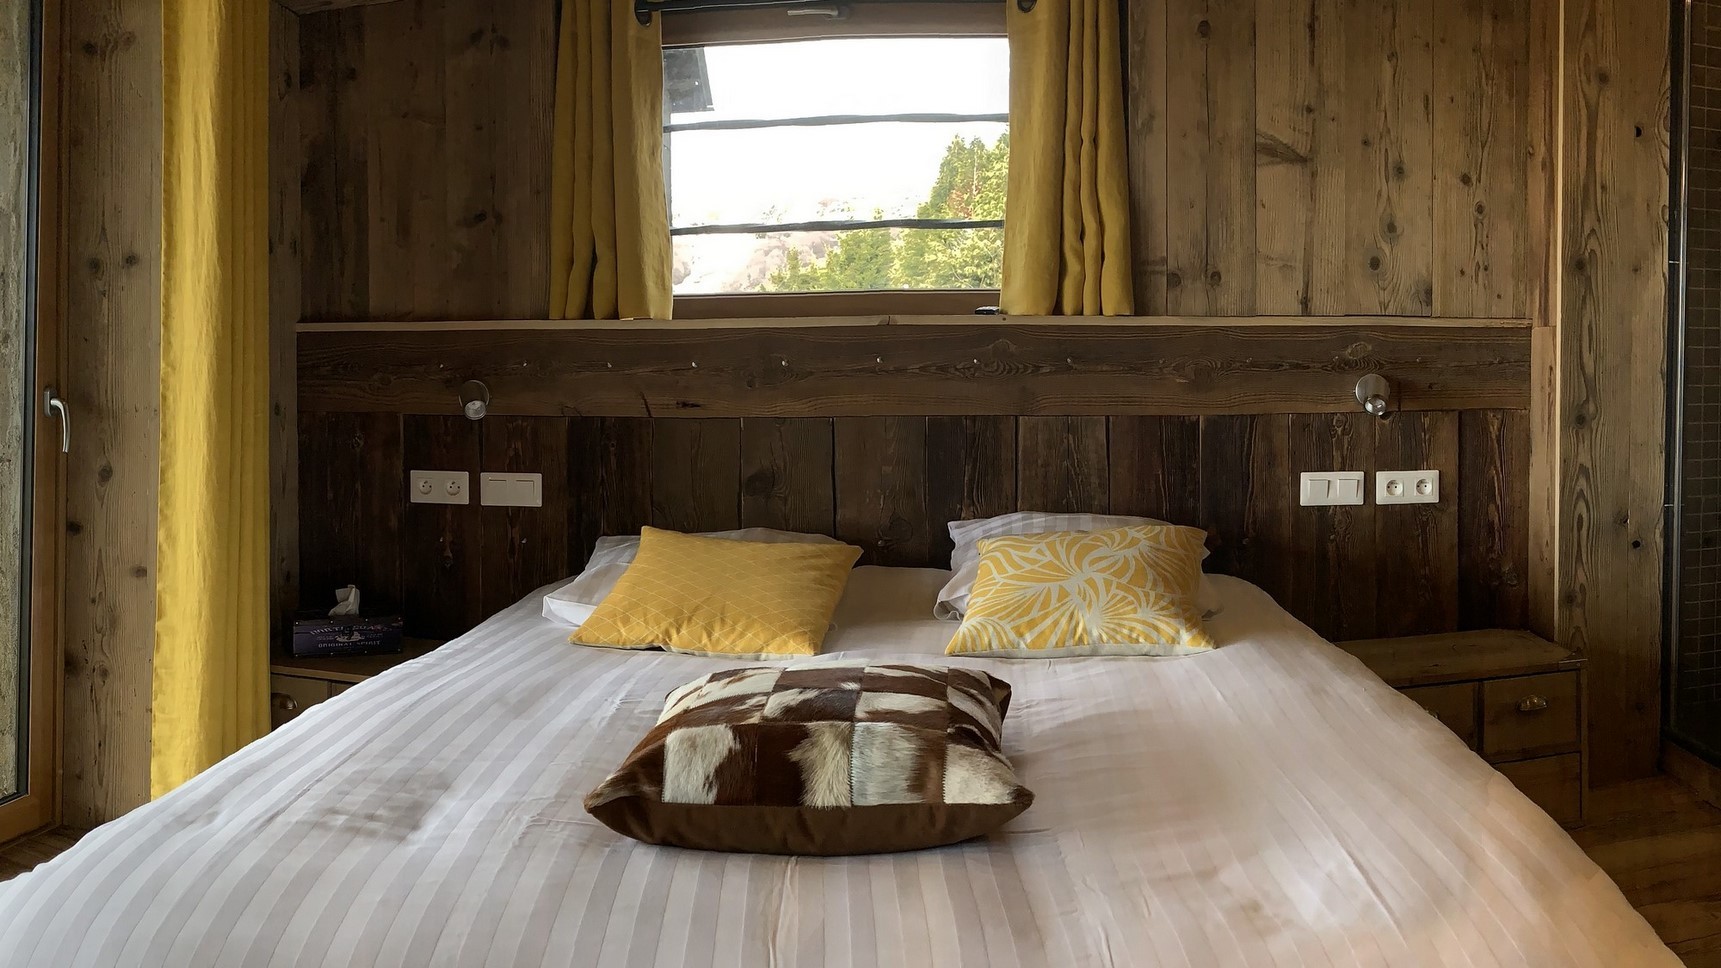 Parental suite king size bed for 1 or 2 people, superb old wood headboard